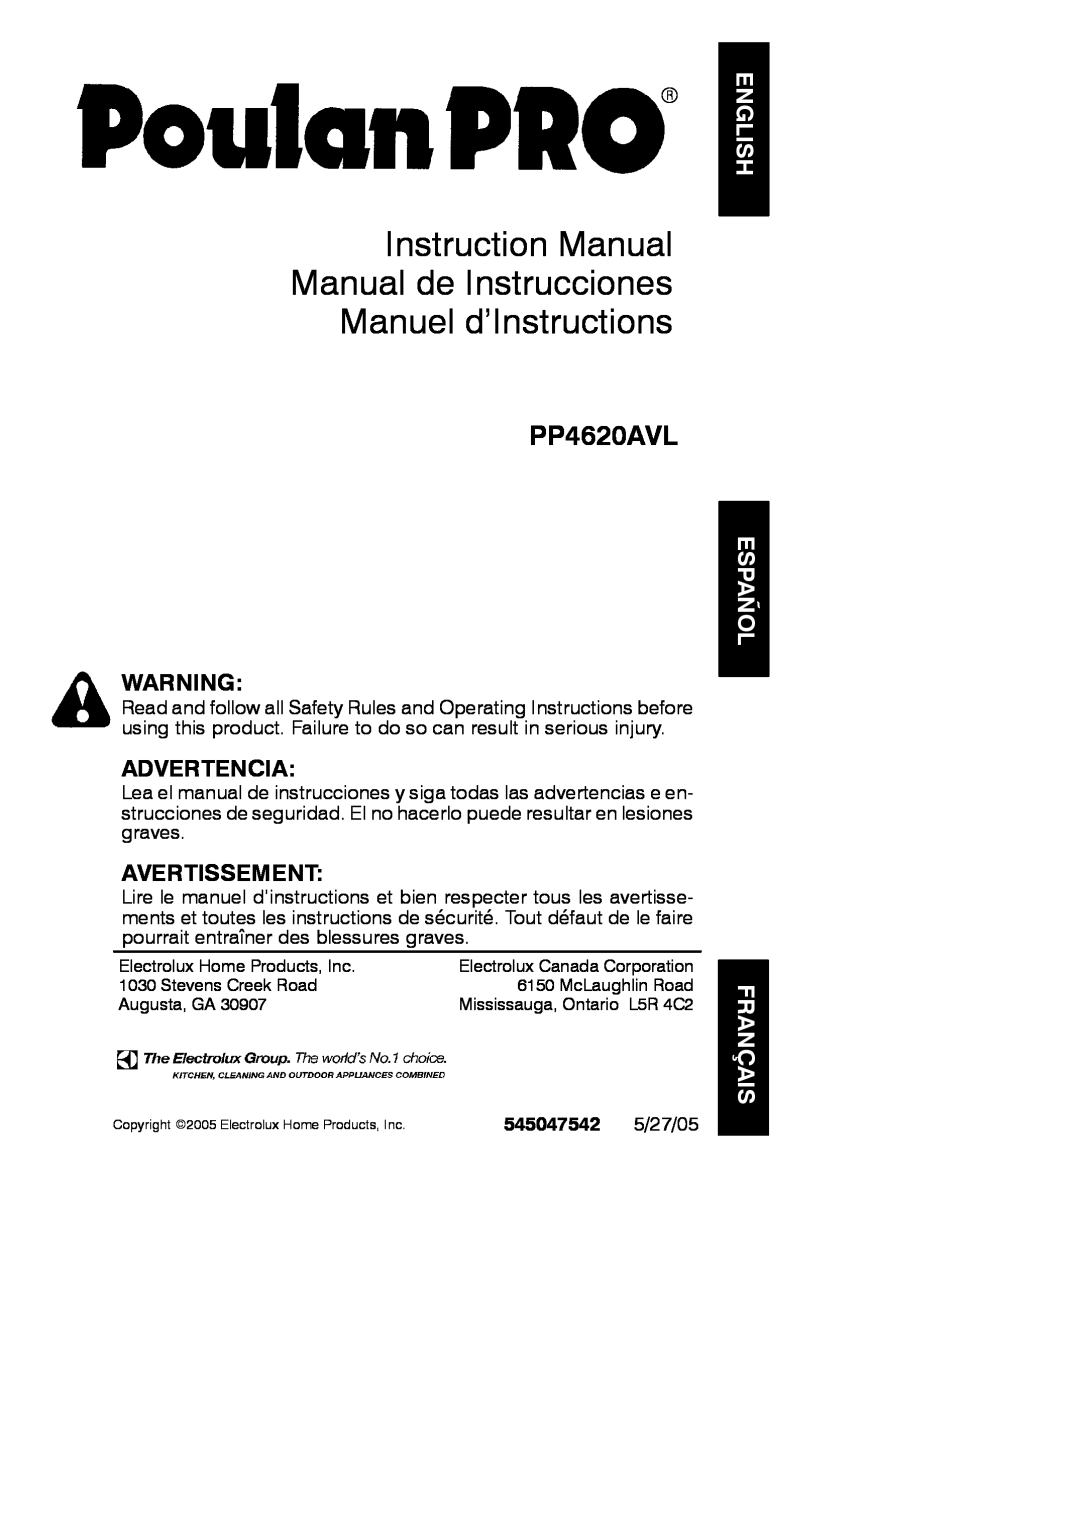 Poulan 545047542 instruction manual English, Español Français, PP4620AVL, Advertencia, Avertissement 